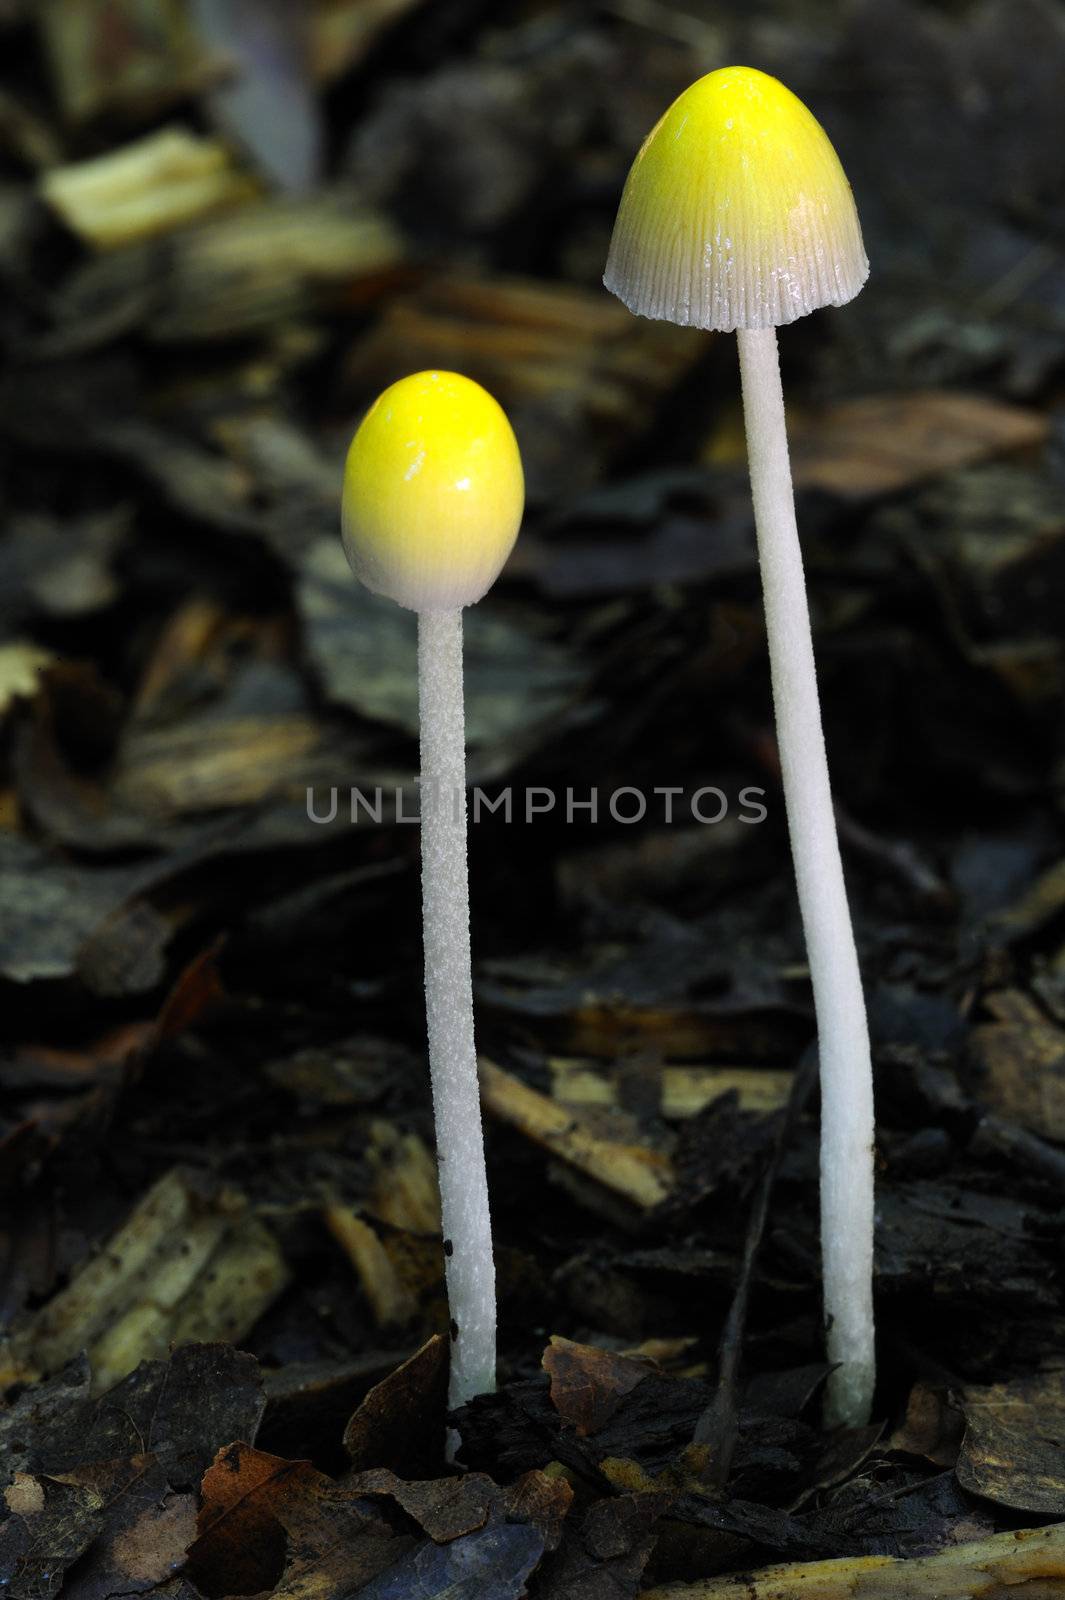 Fungi by Bateleur